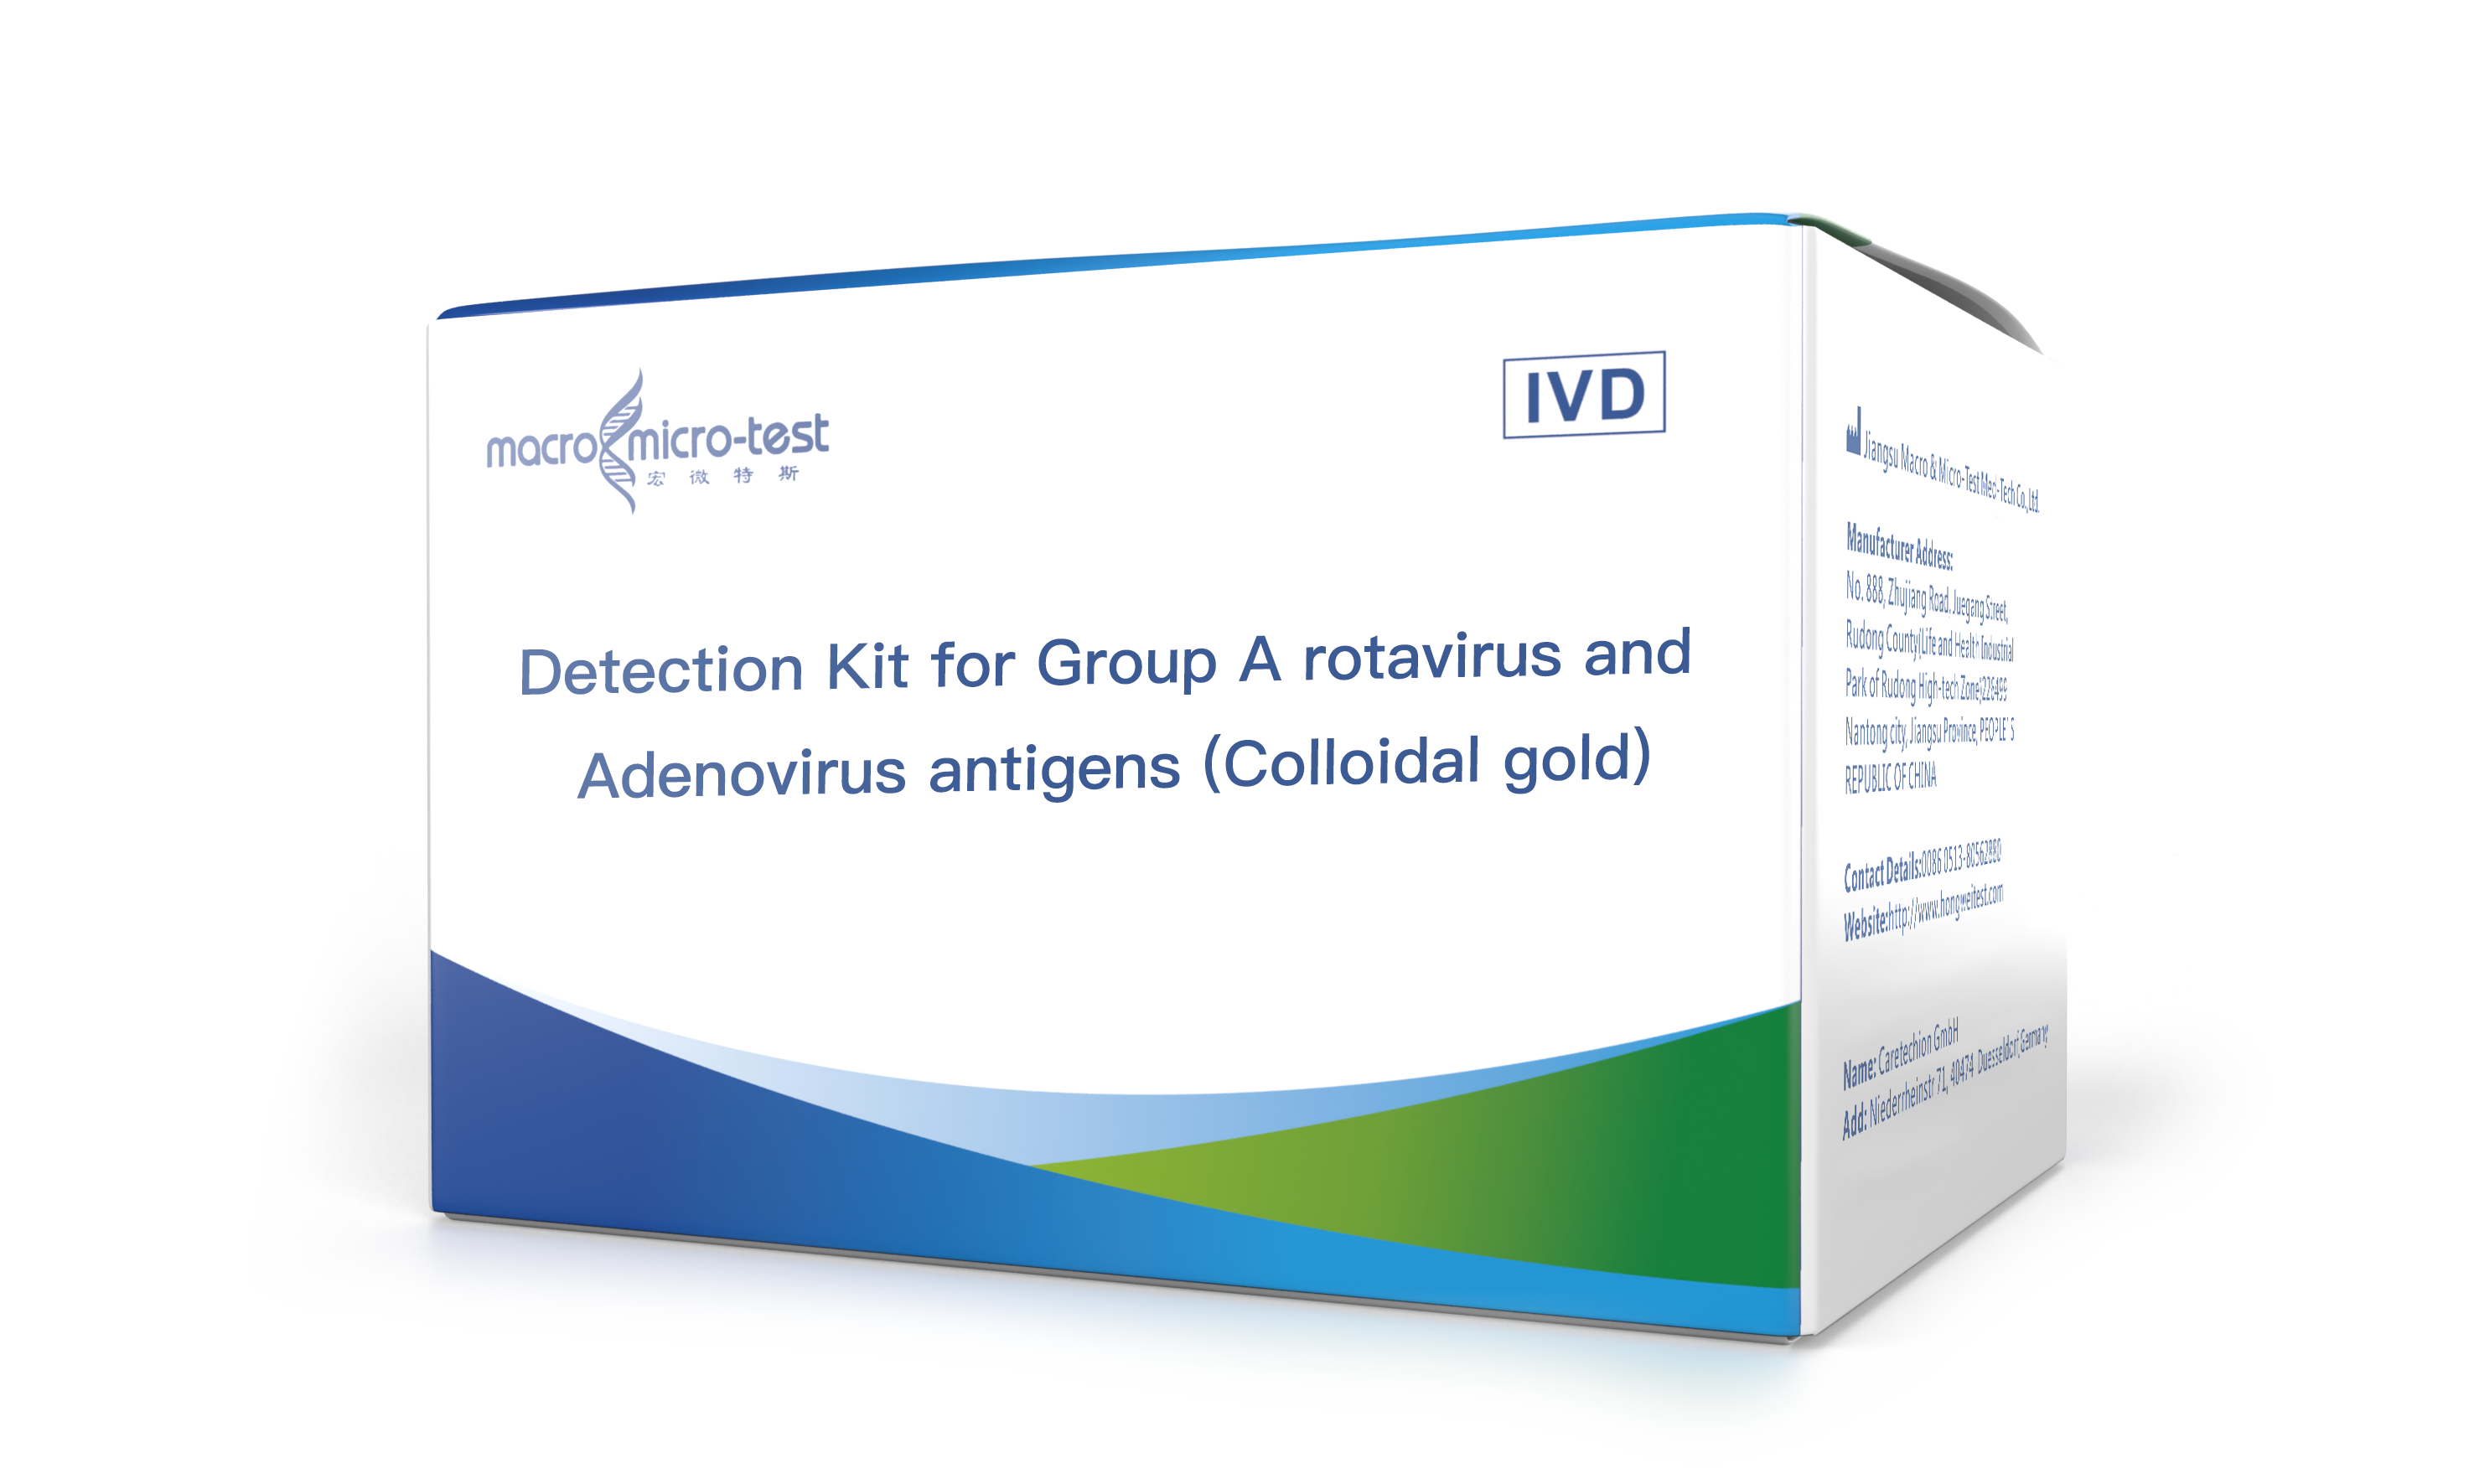 Detection Kit for Group A Rotavirus and Adenovirus antigens (Colloidal gold) – Macro & Micro-Test